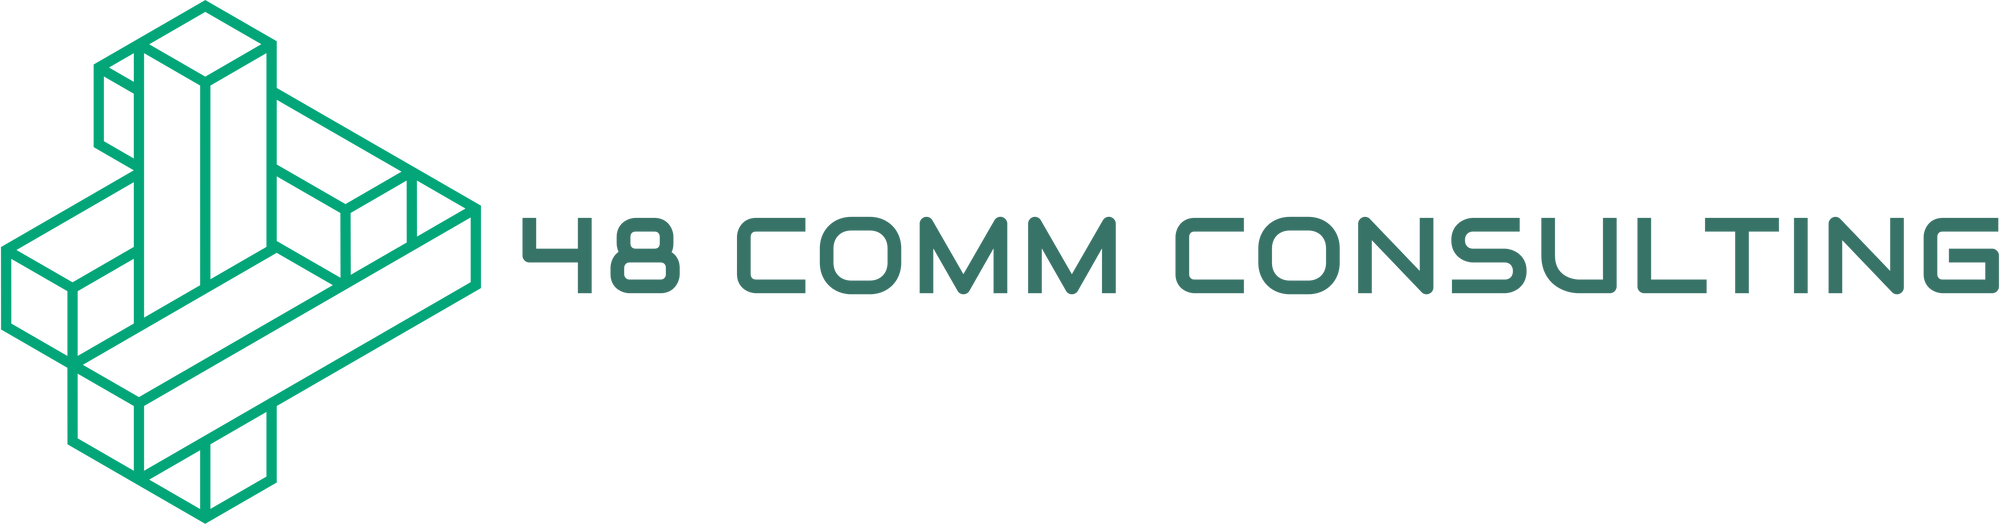 48-comm-consulting-logo